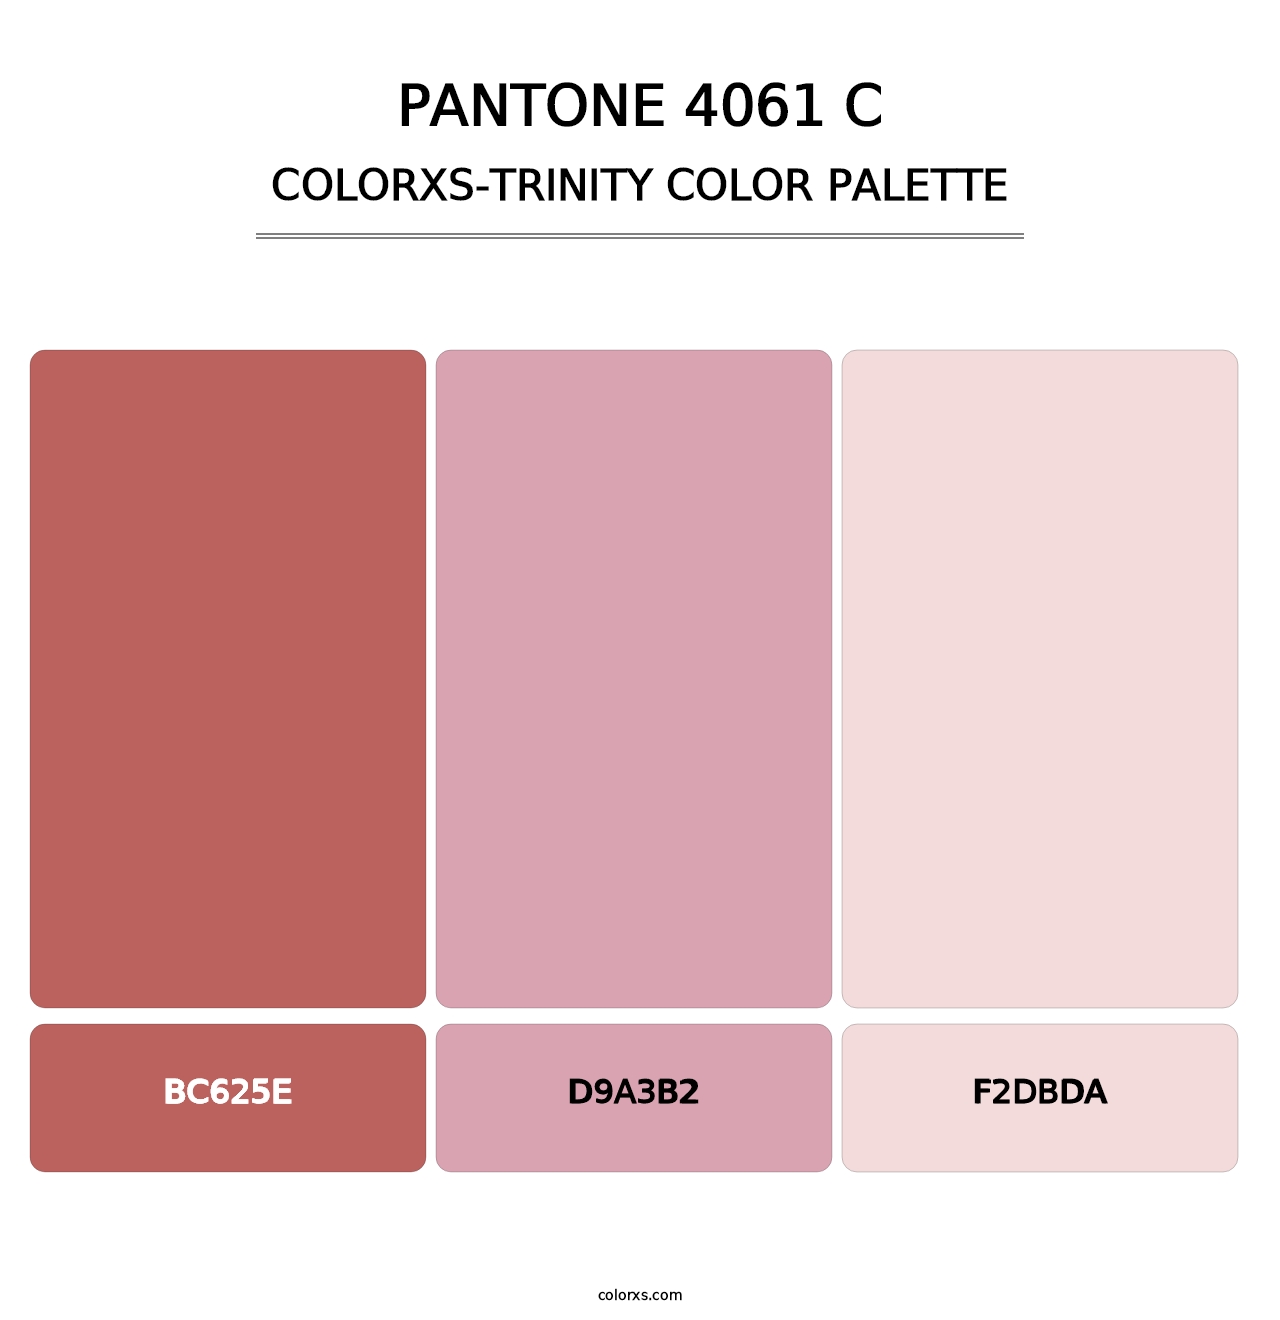 PANTONE 4061 C - Colorxs Trinity Palette